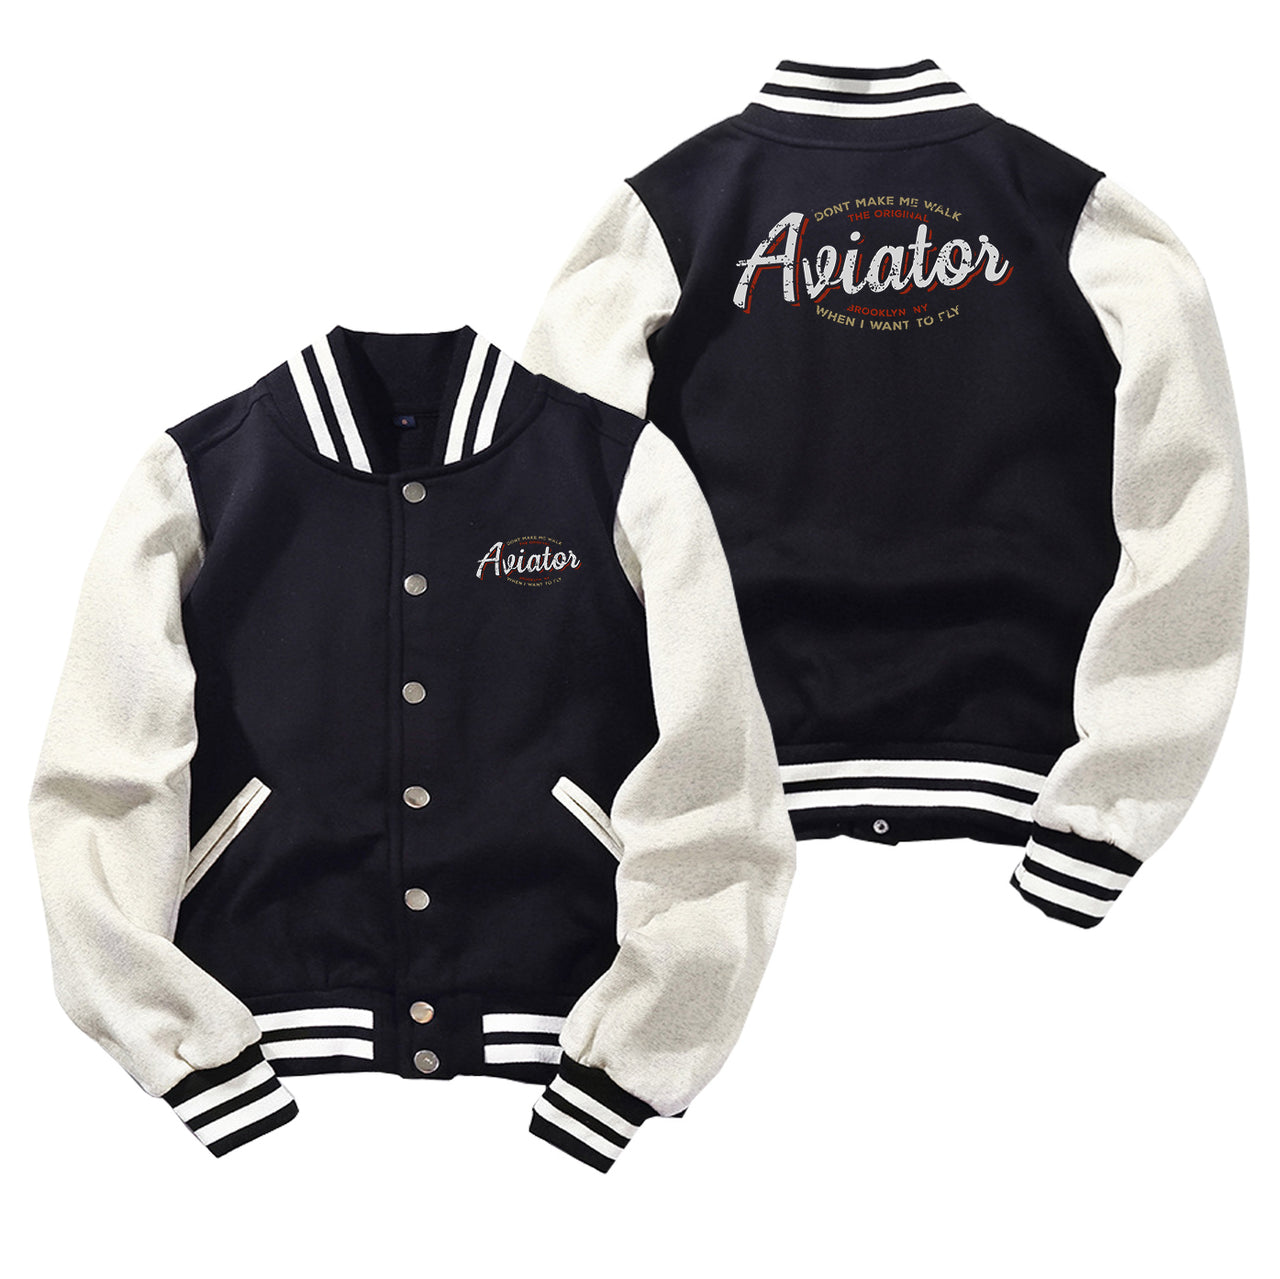 Aviator - Dont Make Me Walk Designed Baseball Style Jackets